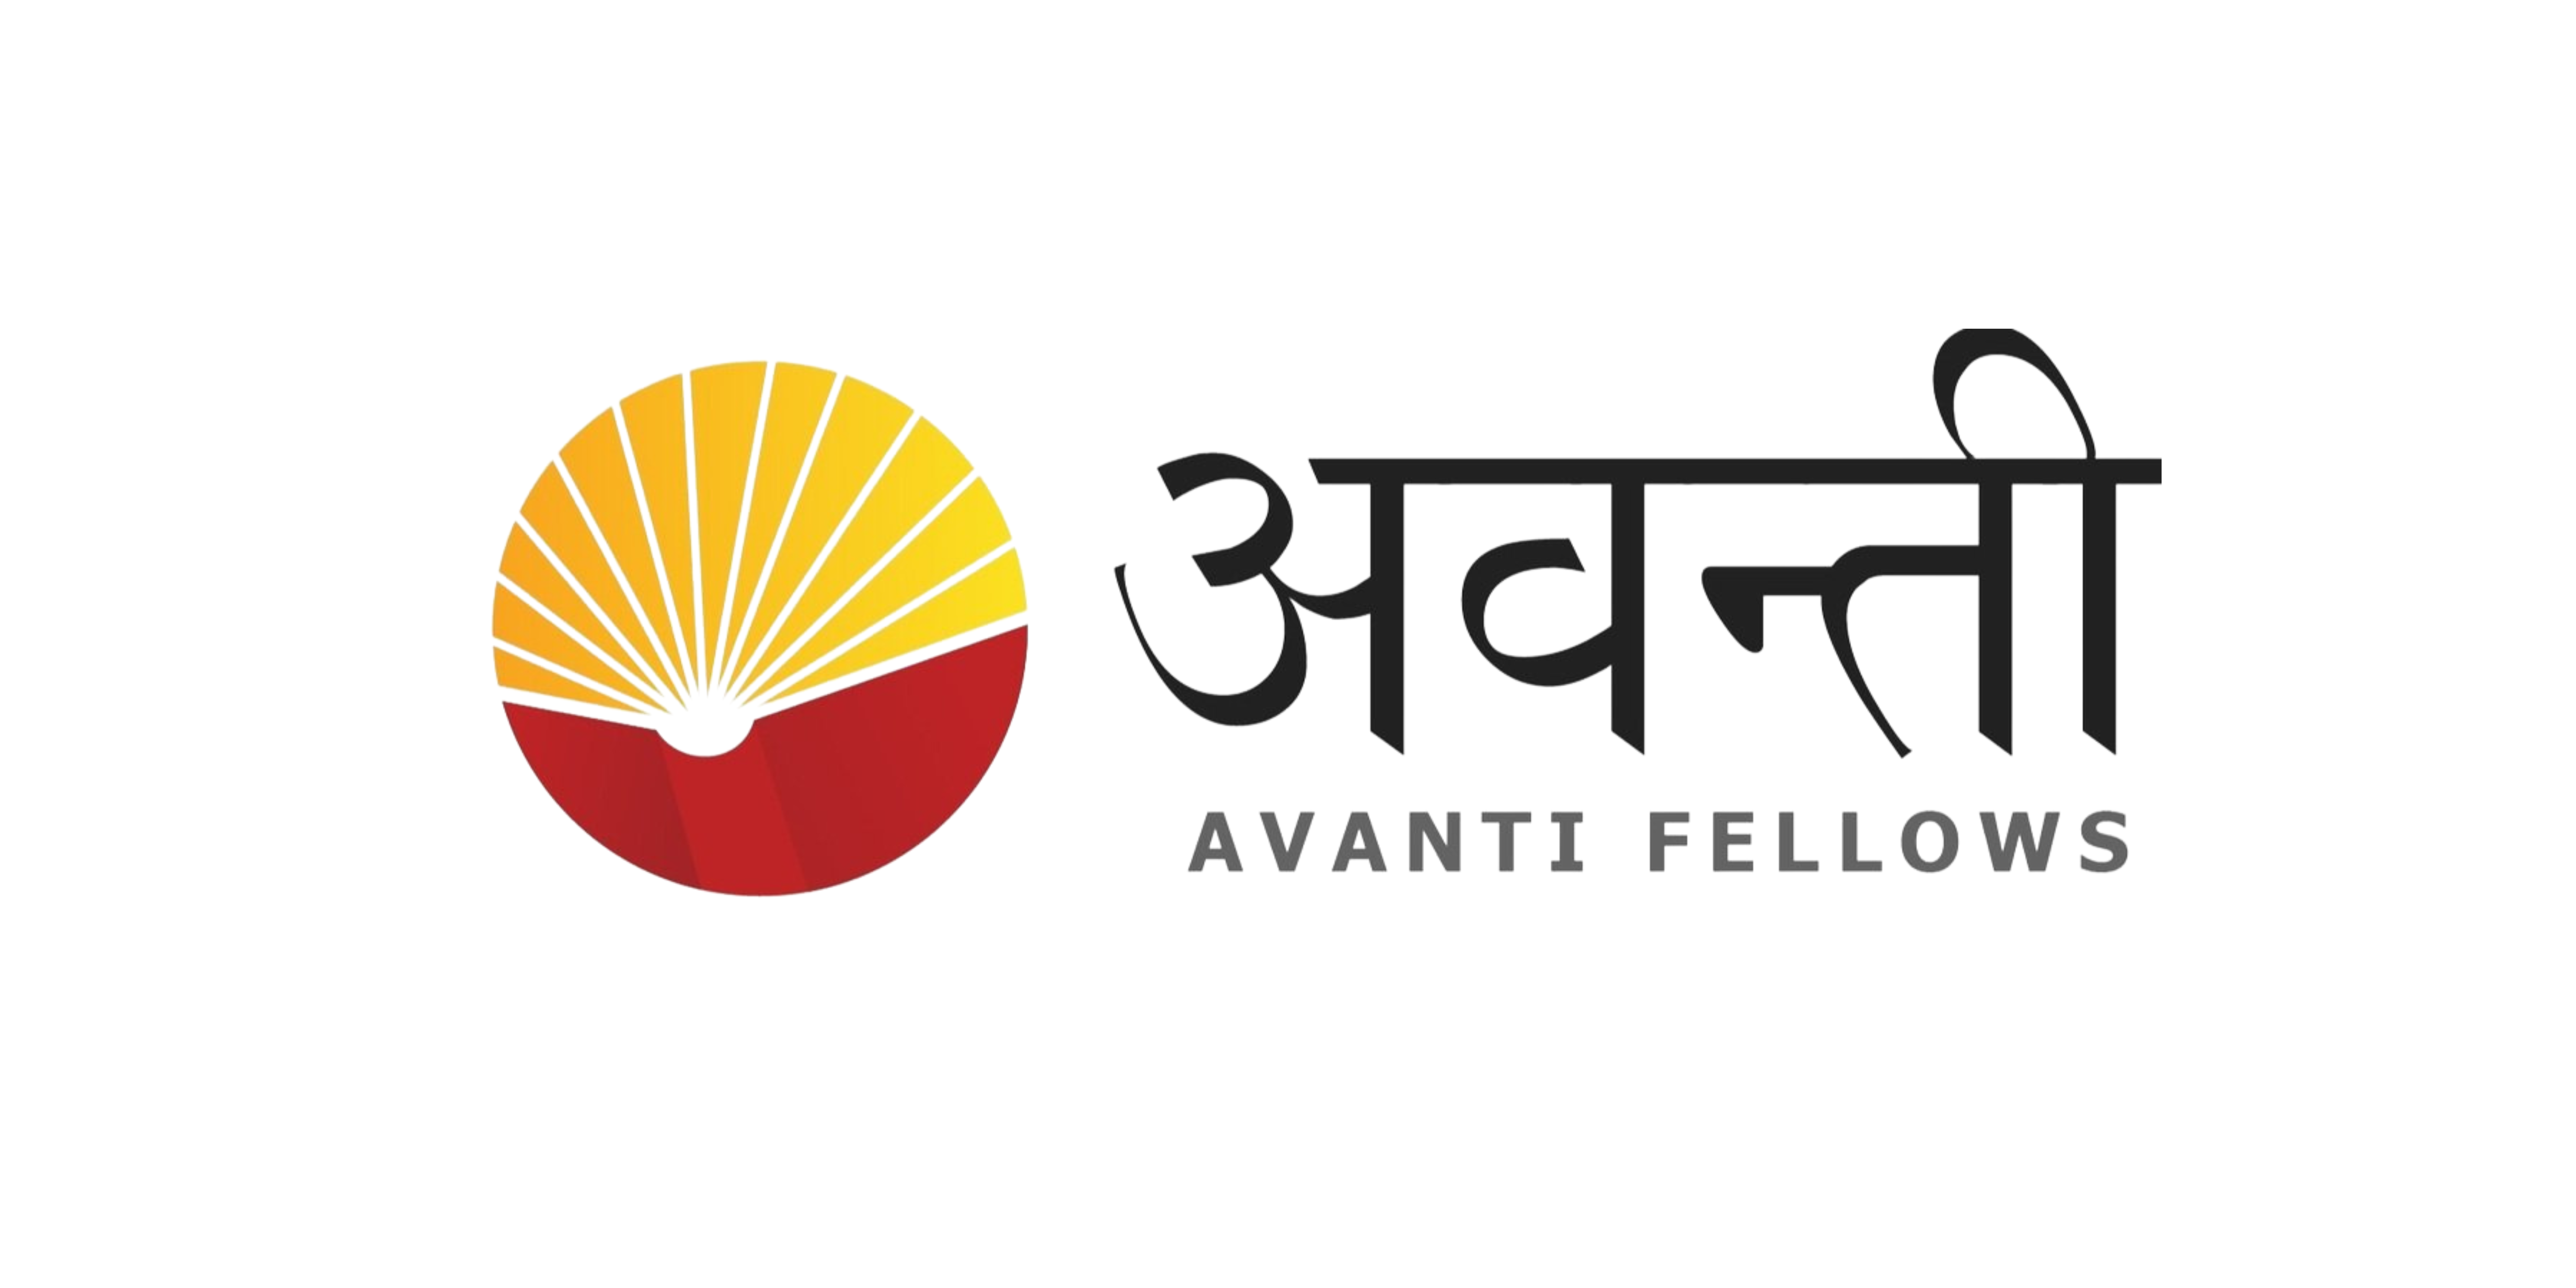 Avanti fellow logo